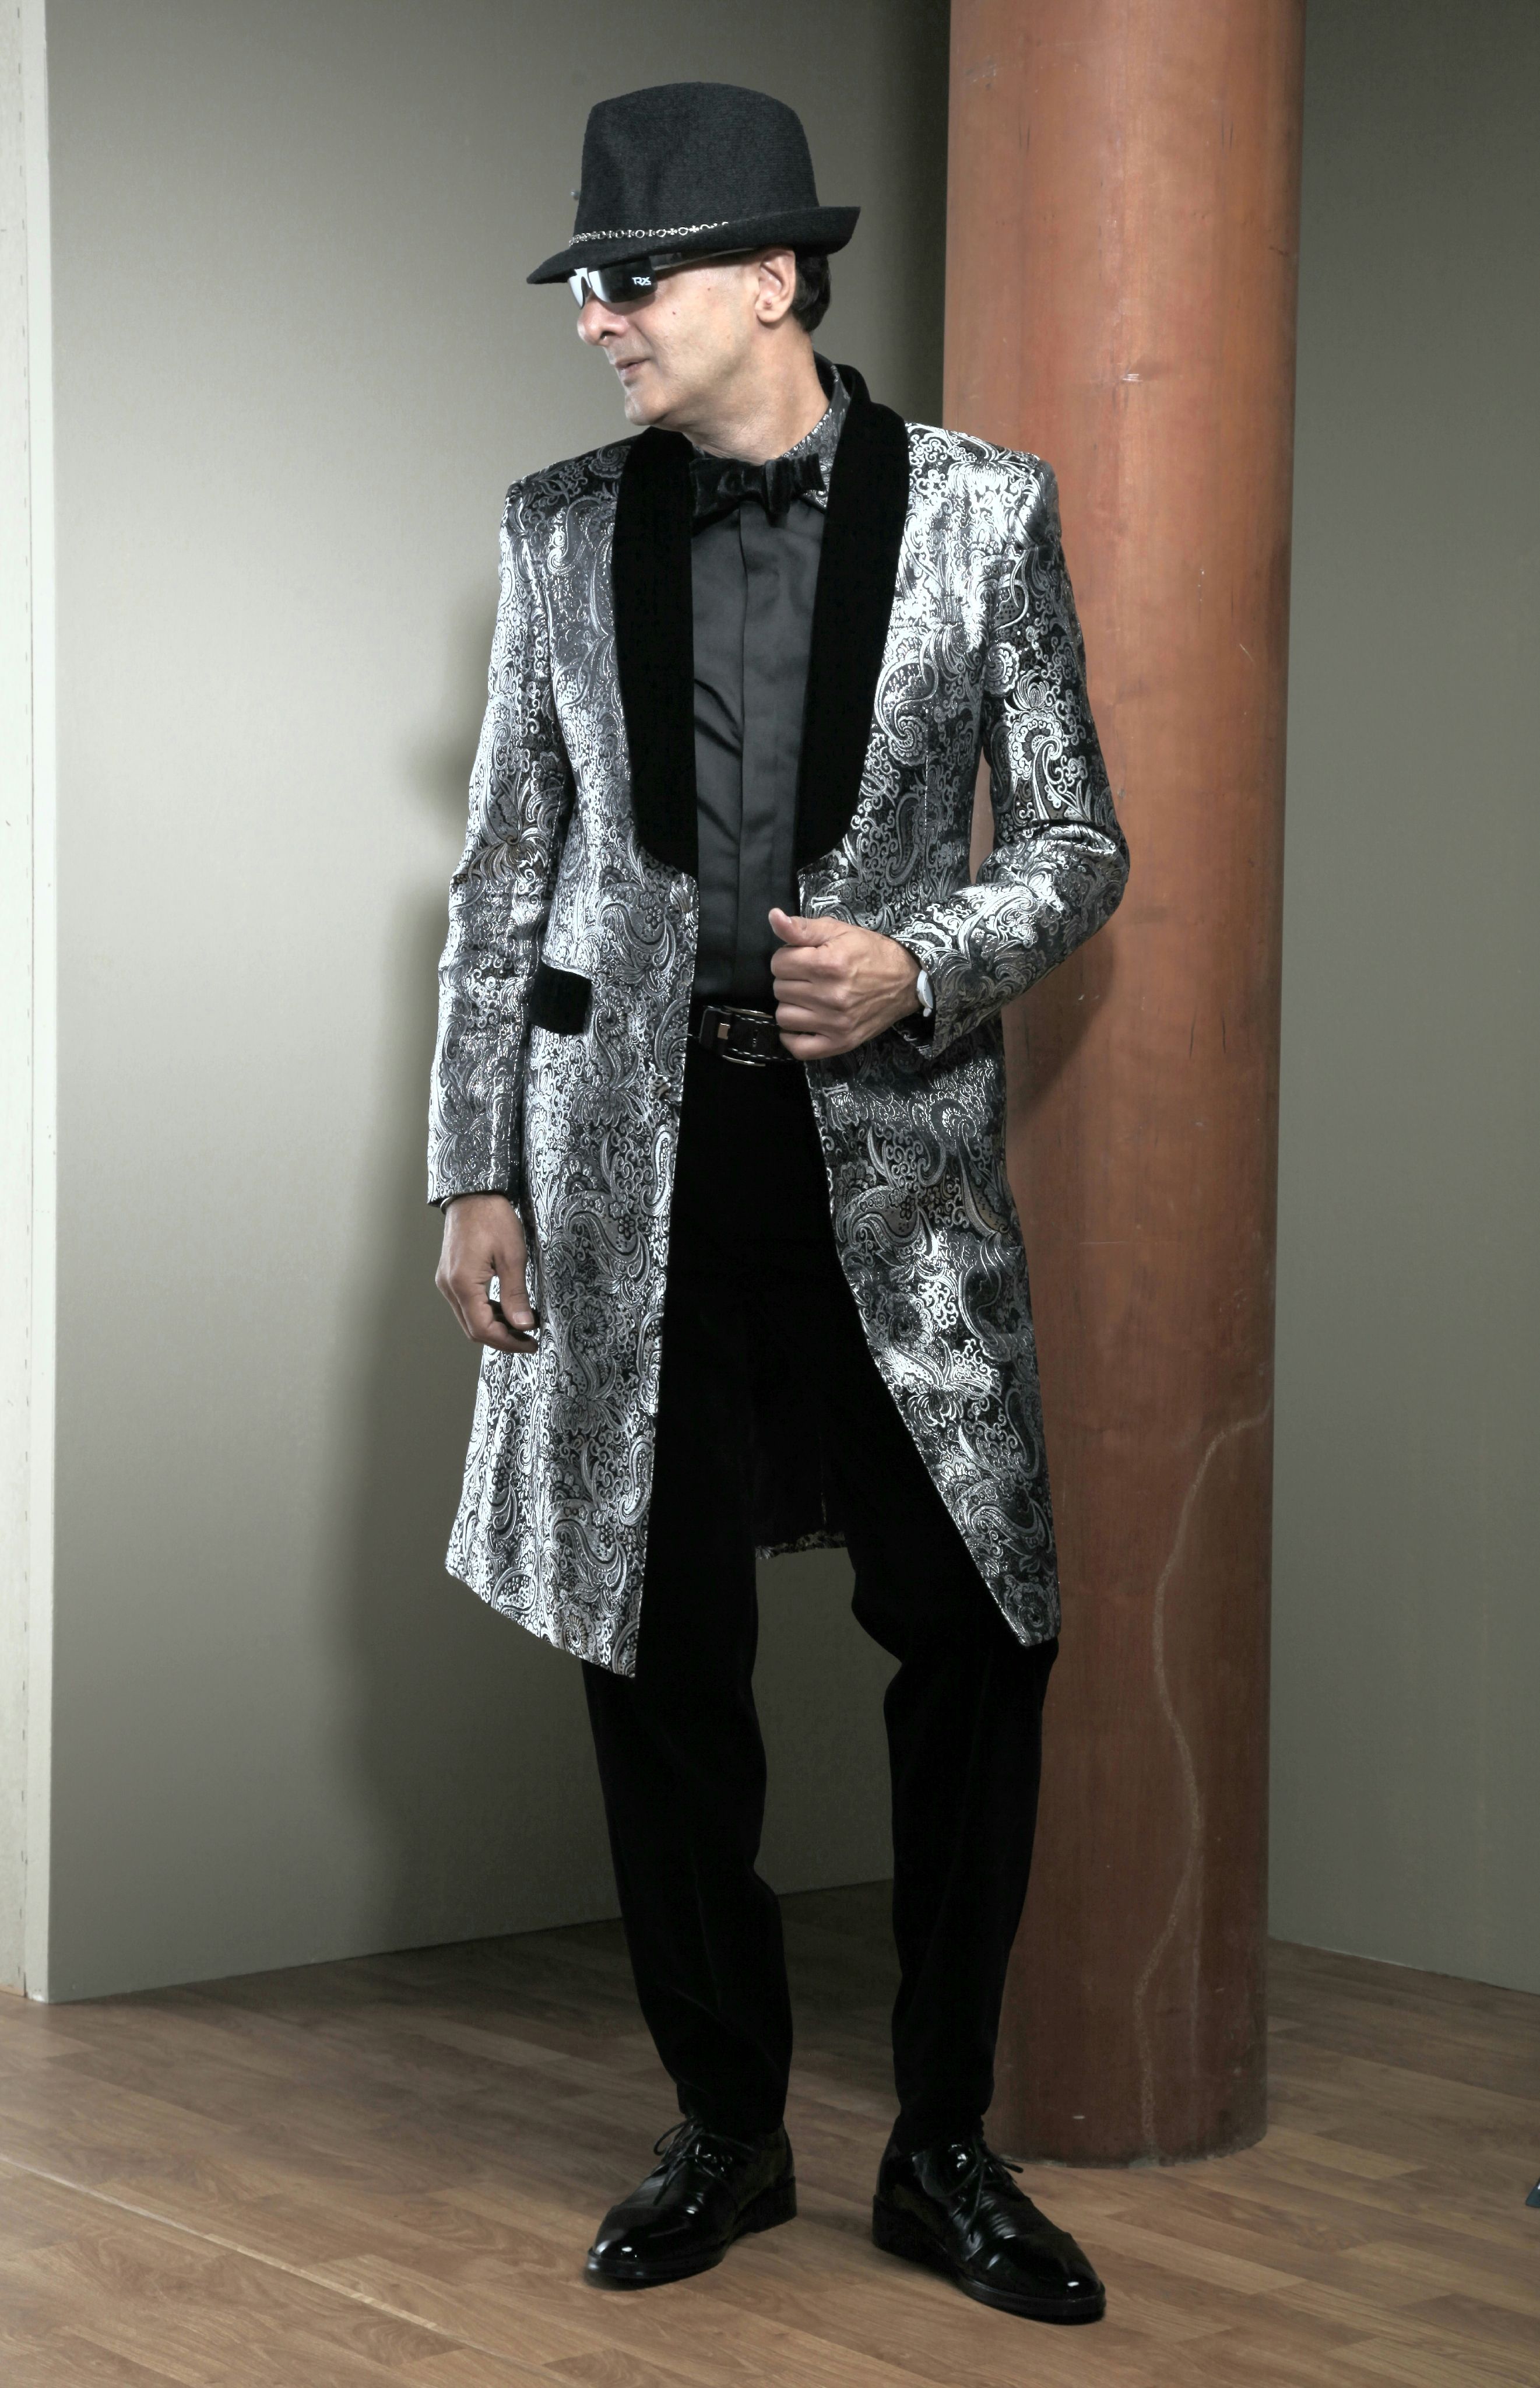 suit-rental-suits-rent-hire-designer-my-singapore-tailor-tailors-rentals-shop-tuxedo-black-tie-wedding-formal-12